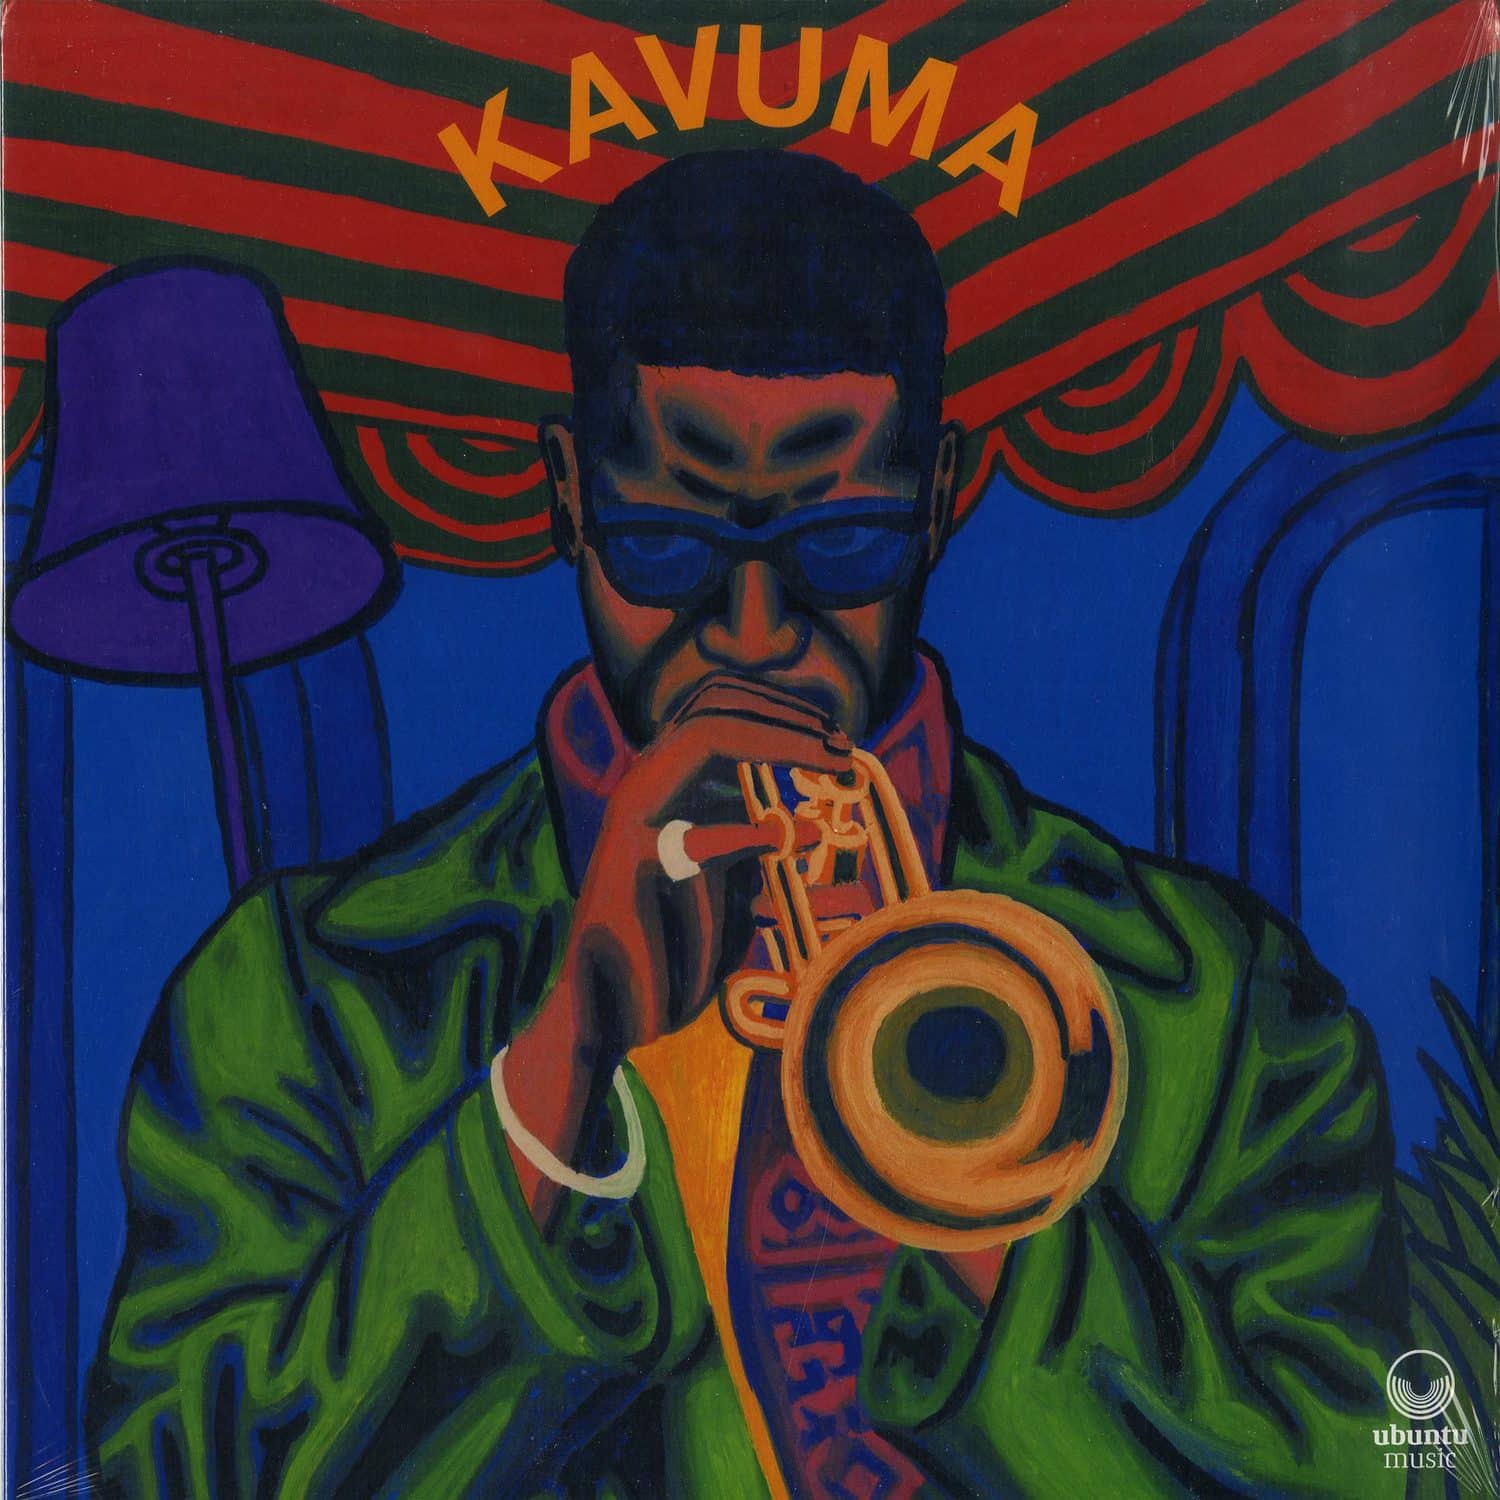 Mark Kavuma - KAVUMA 